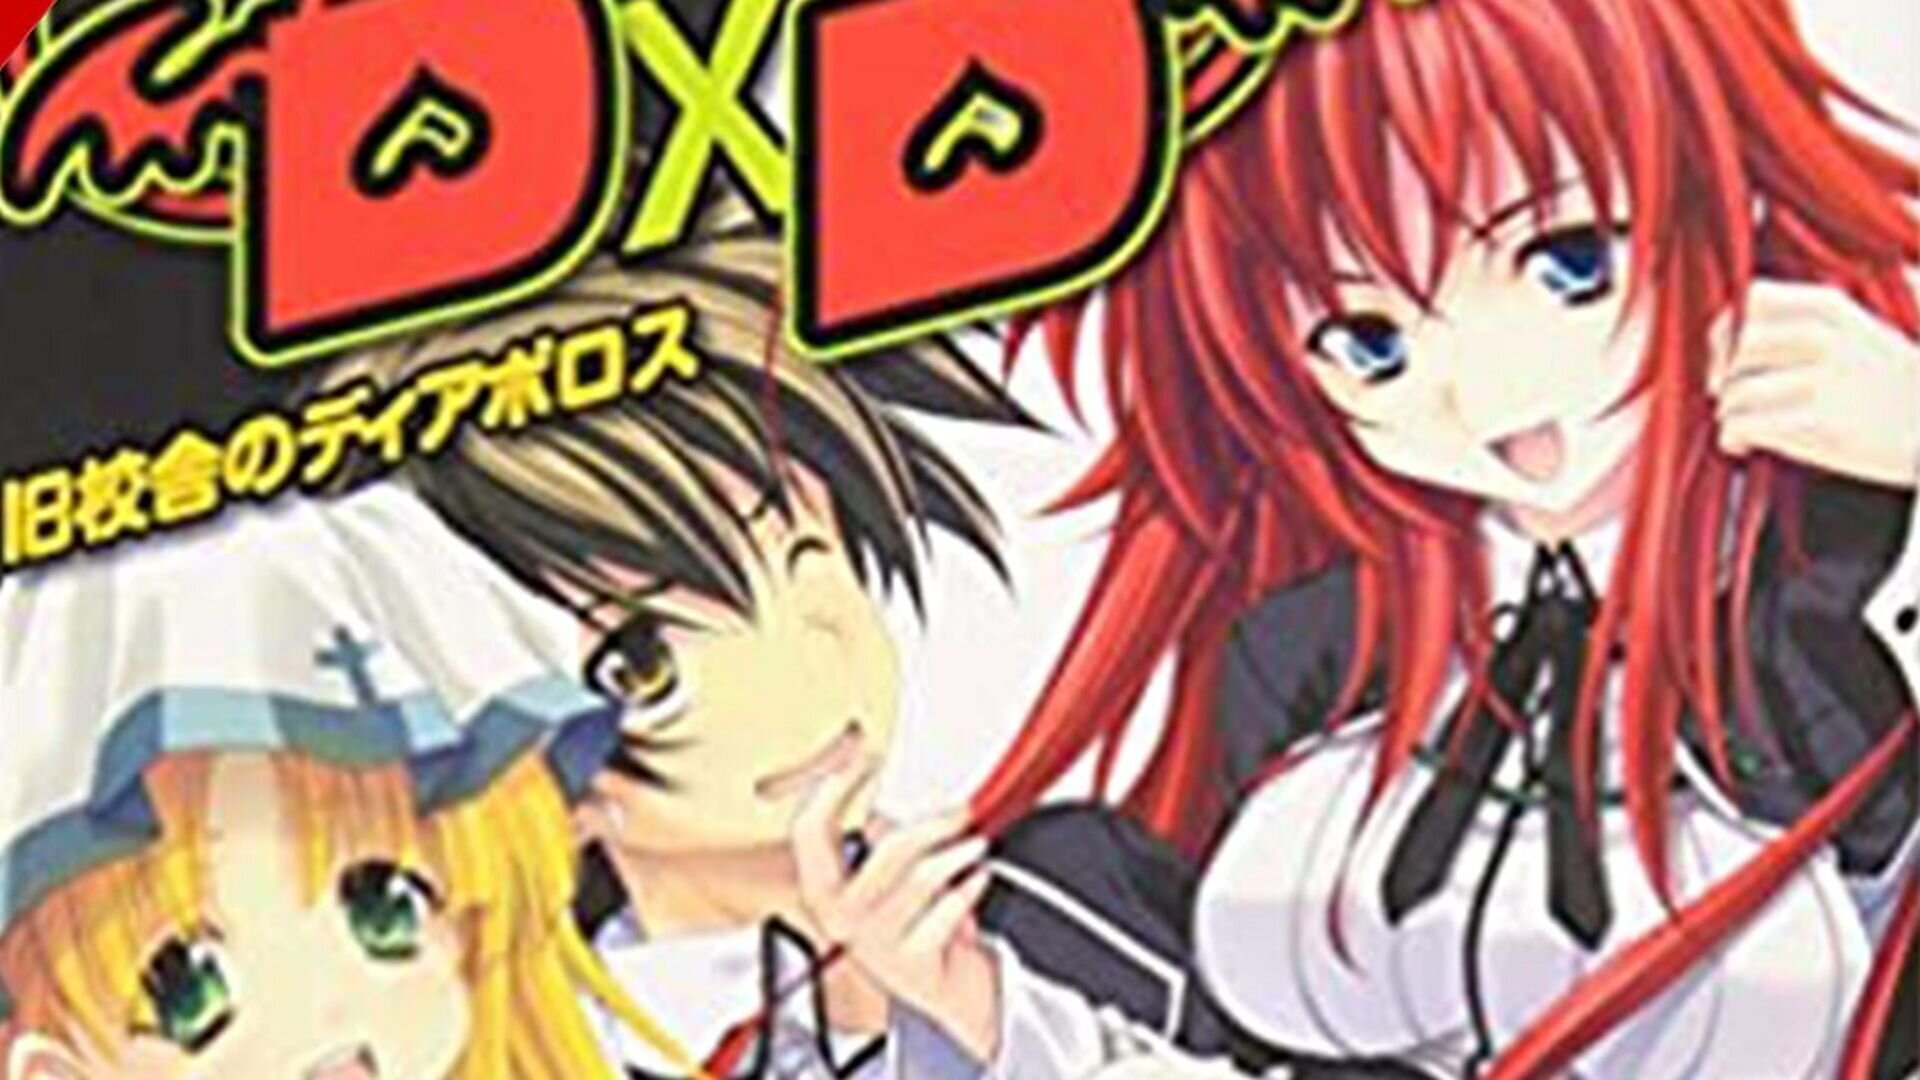 Anime Spotlight - High School DxD New - Anime News Network